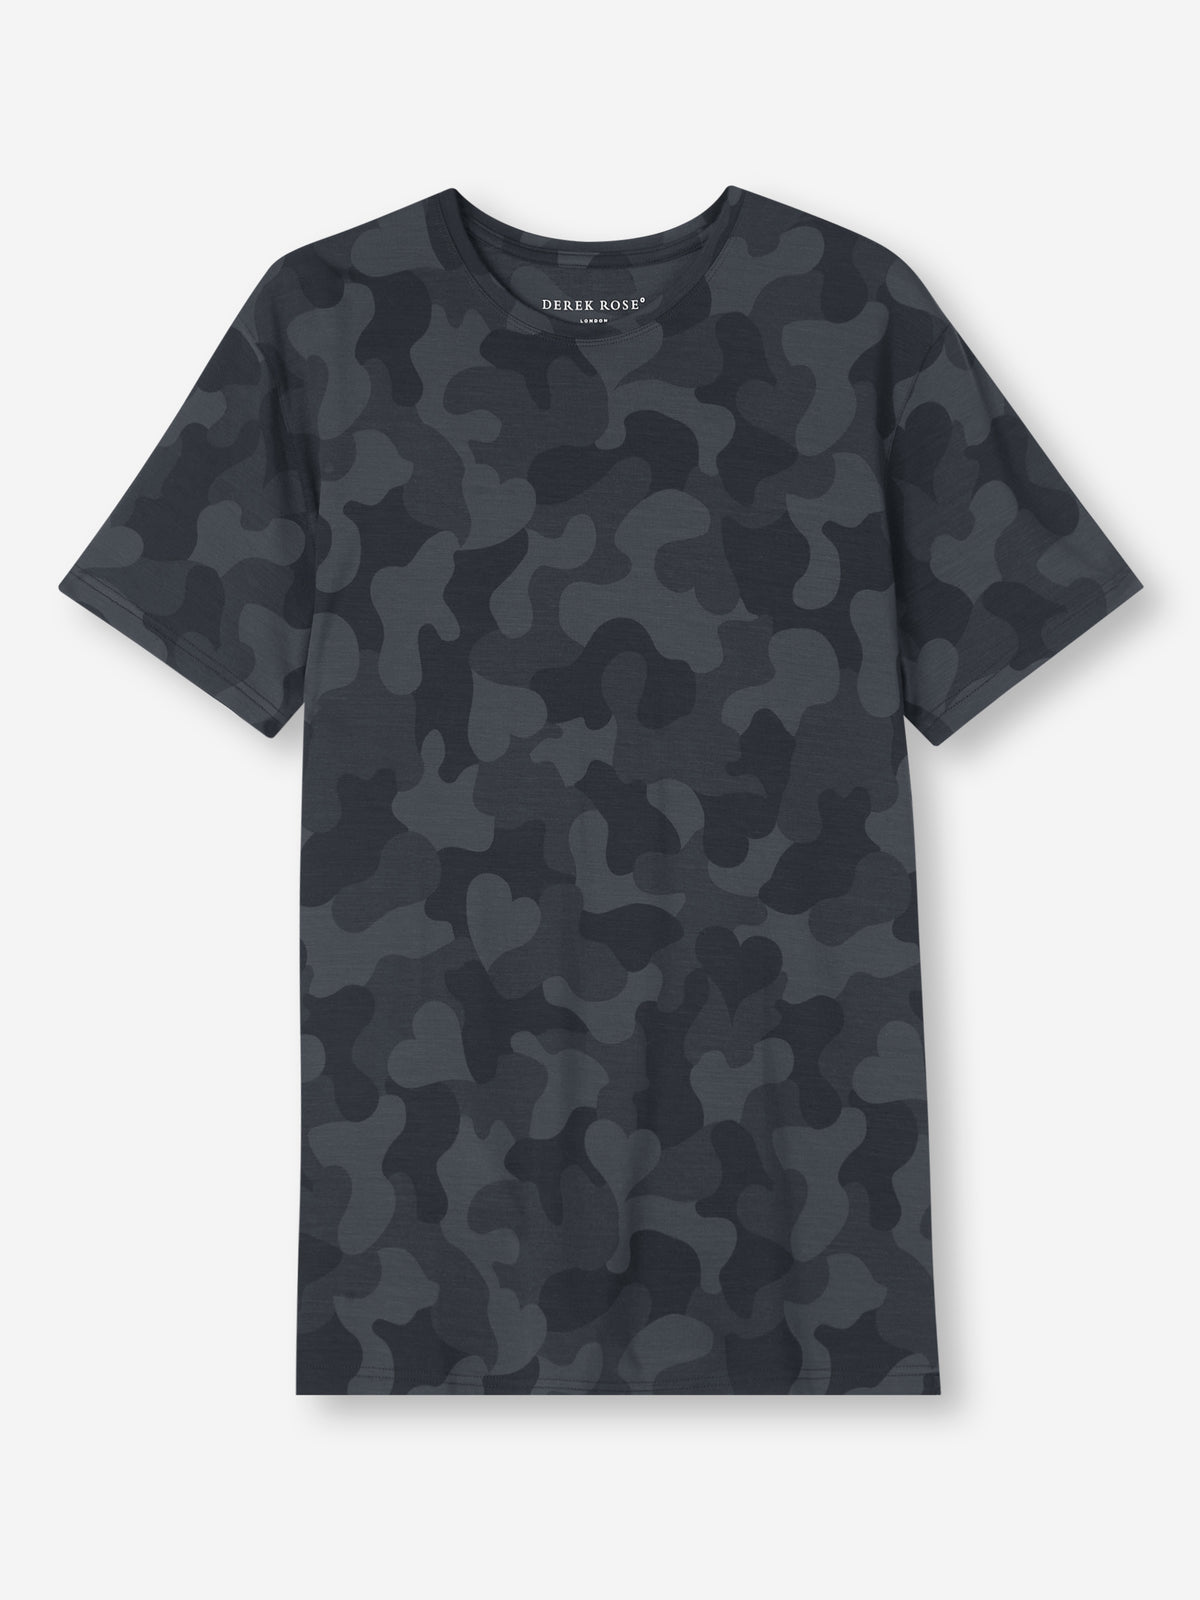 Men's T-Shirt London 11 Micro Modal Black